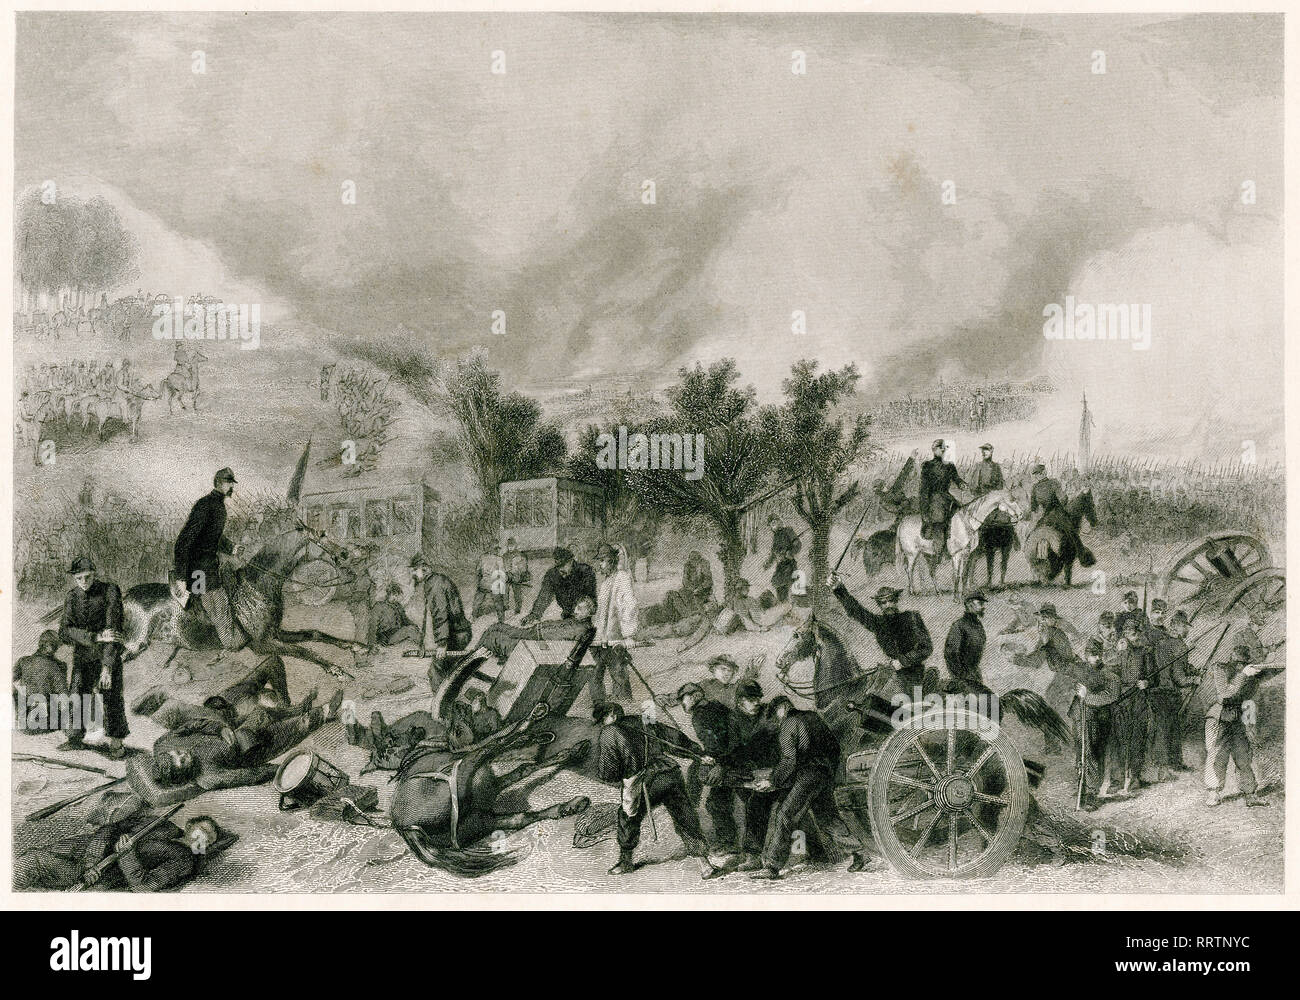 Battle of Gettysburg, American Civil War, steel engraving by Alonzo Chappel, 1864 Stock Photo